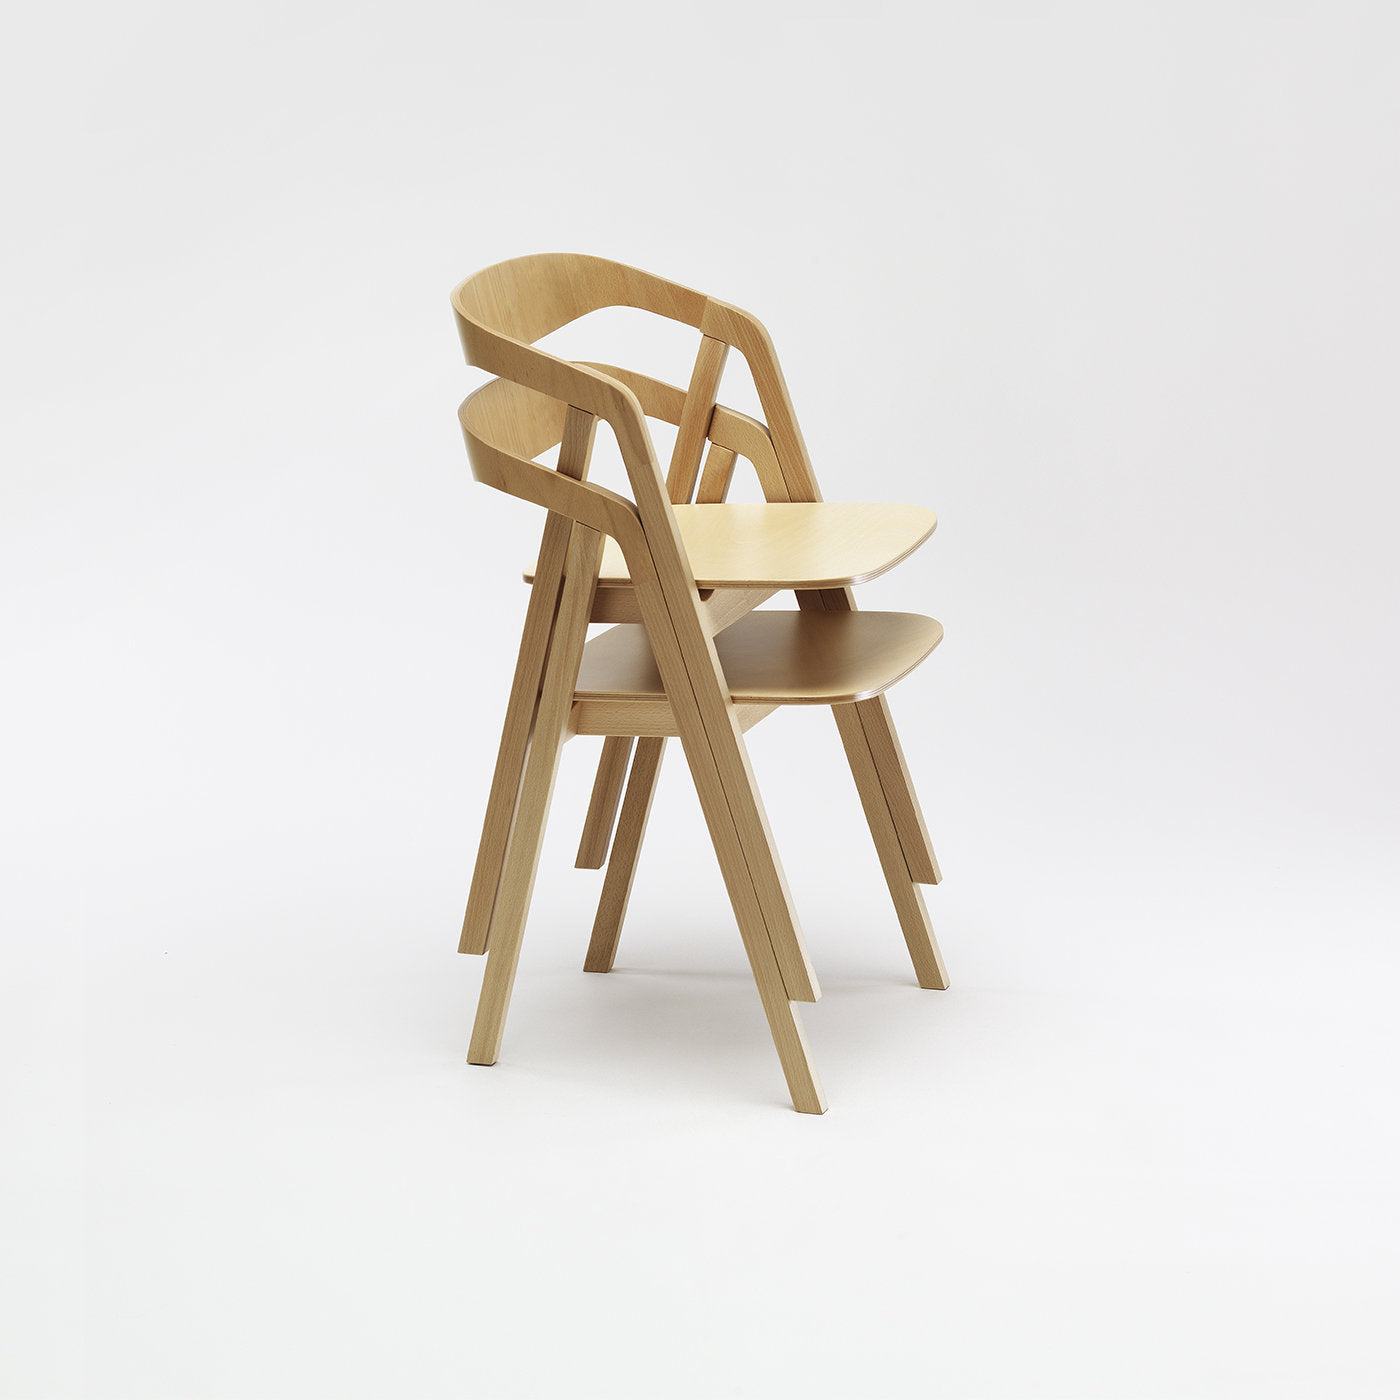 Set of 2 Sta Chairs by Tomoko Azumi - Alternative view 4